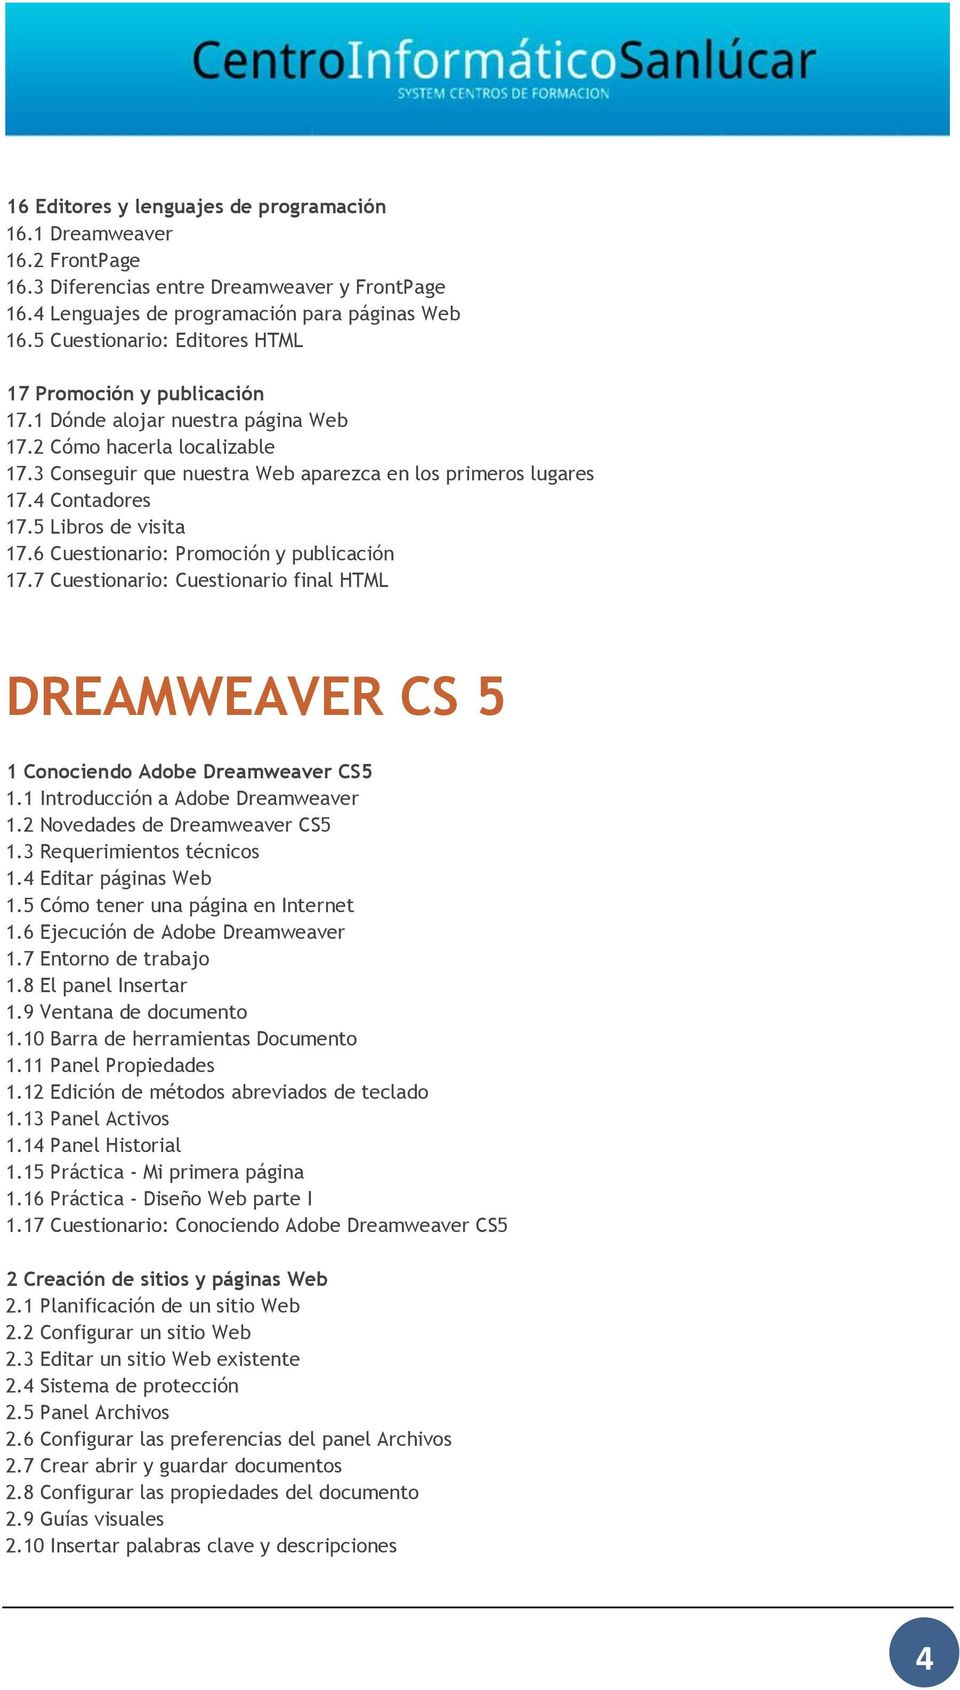 4 Contadores 17.5 Libros de visita 17.6 Cuestionario: Promoción y publicación 17.7 Cuestionario: Cuestionario final HTML DREAMWEAVER CS 5 1 Conociendo Adobe Dreamweaver CS5 1.